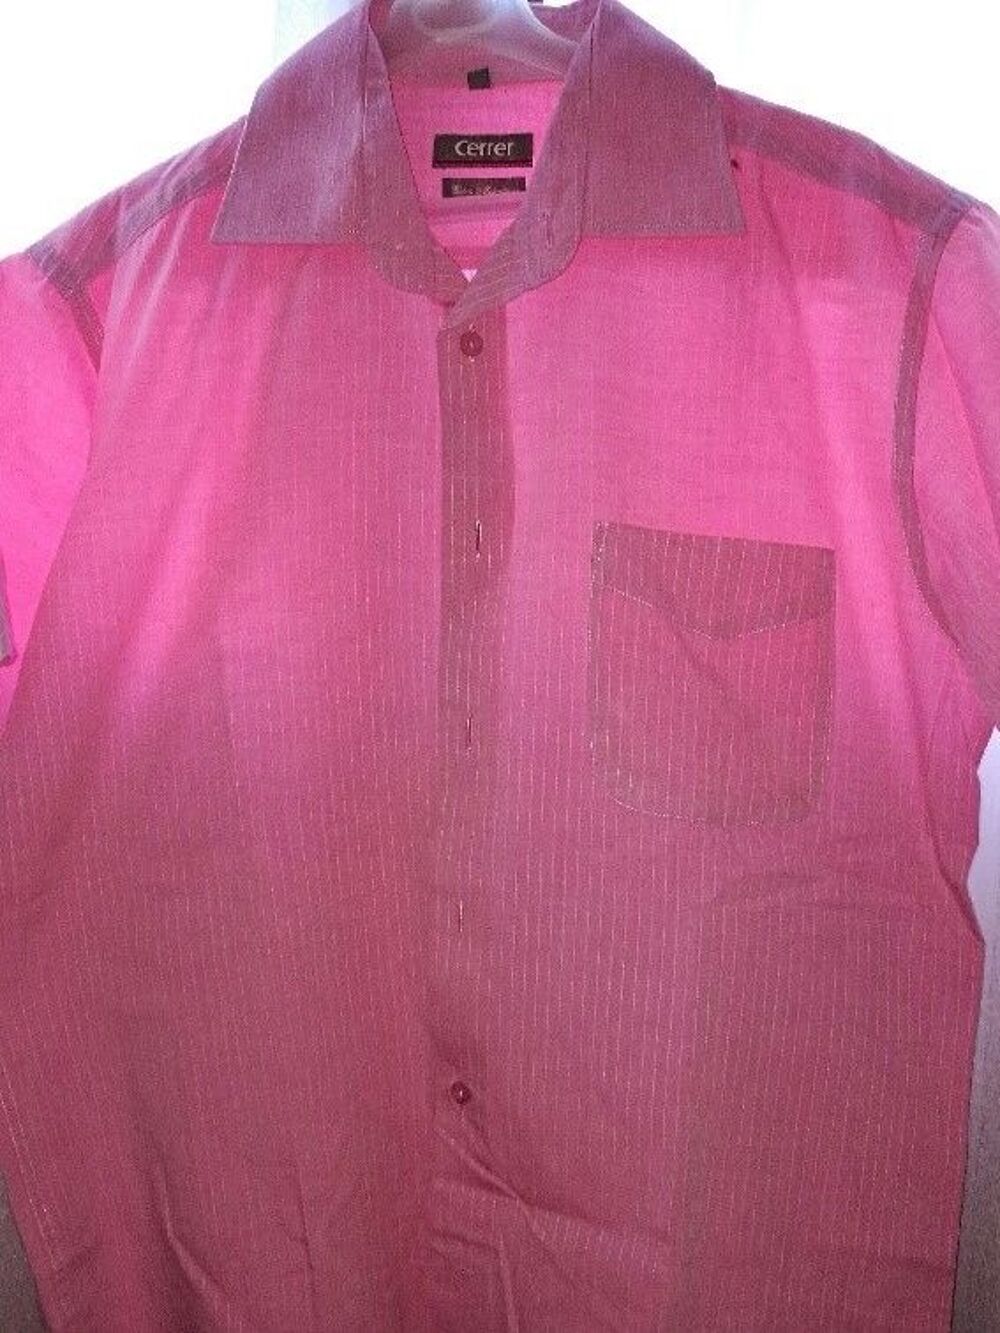 Chemise manches courtes rose marque Cerrer taille 3 Vtements